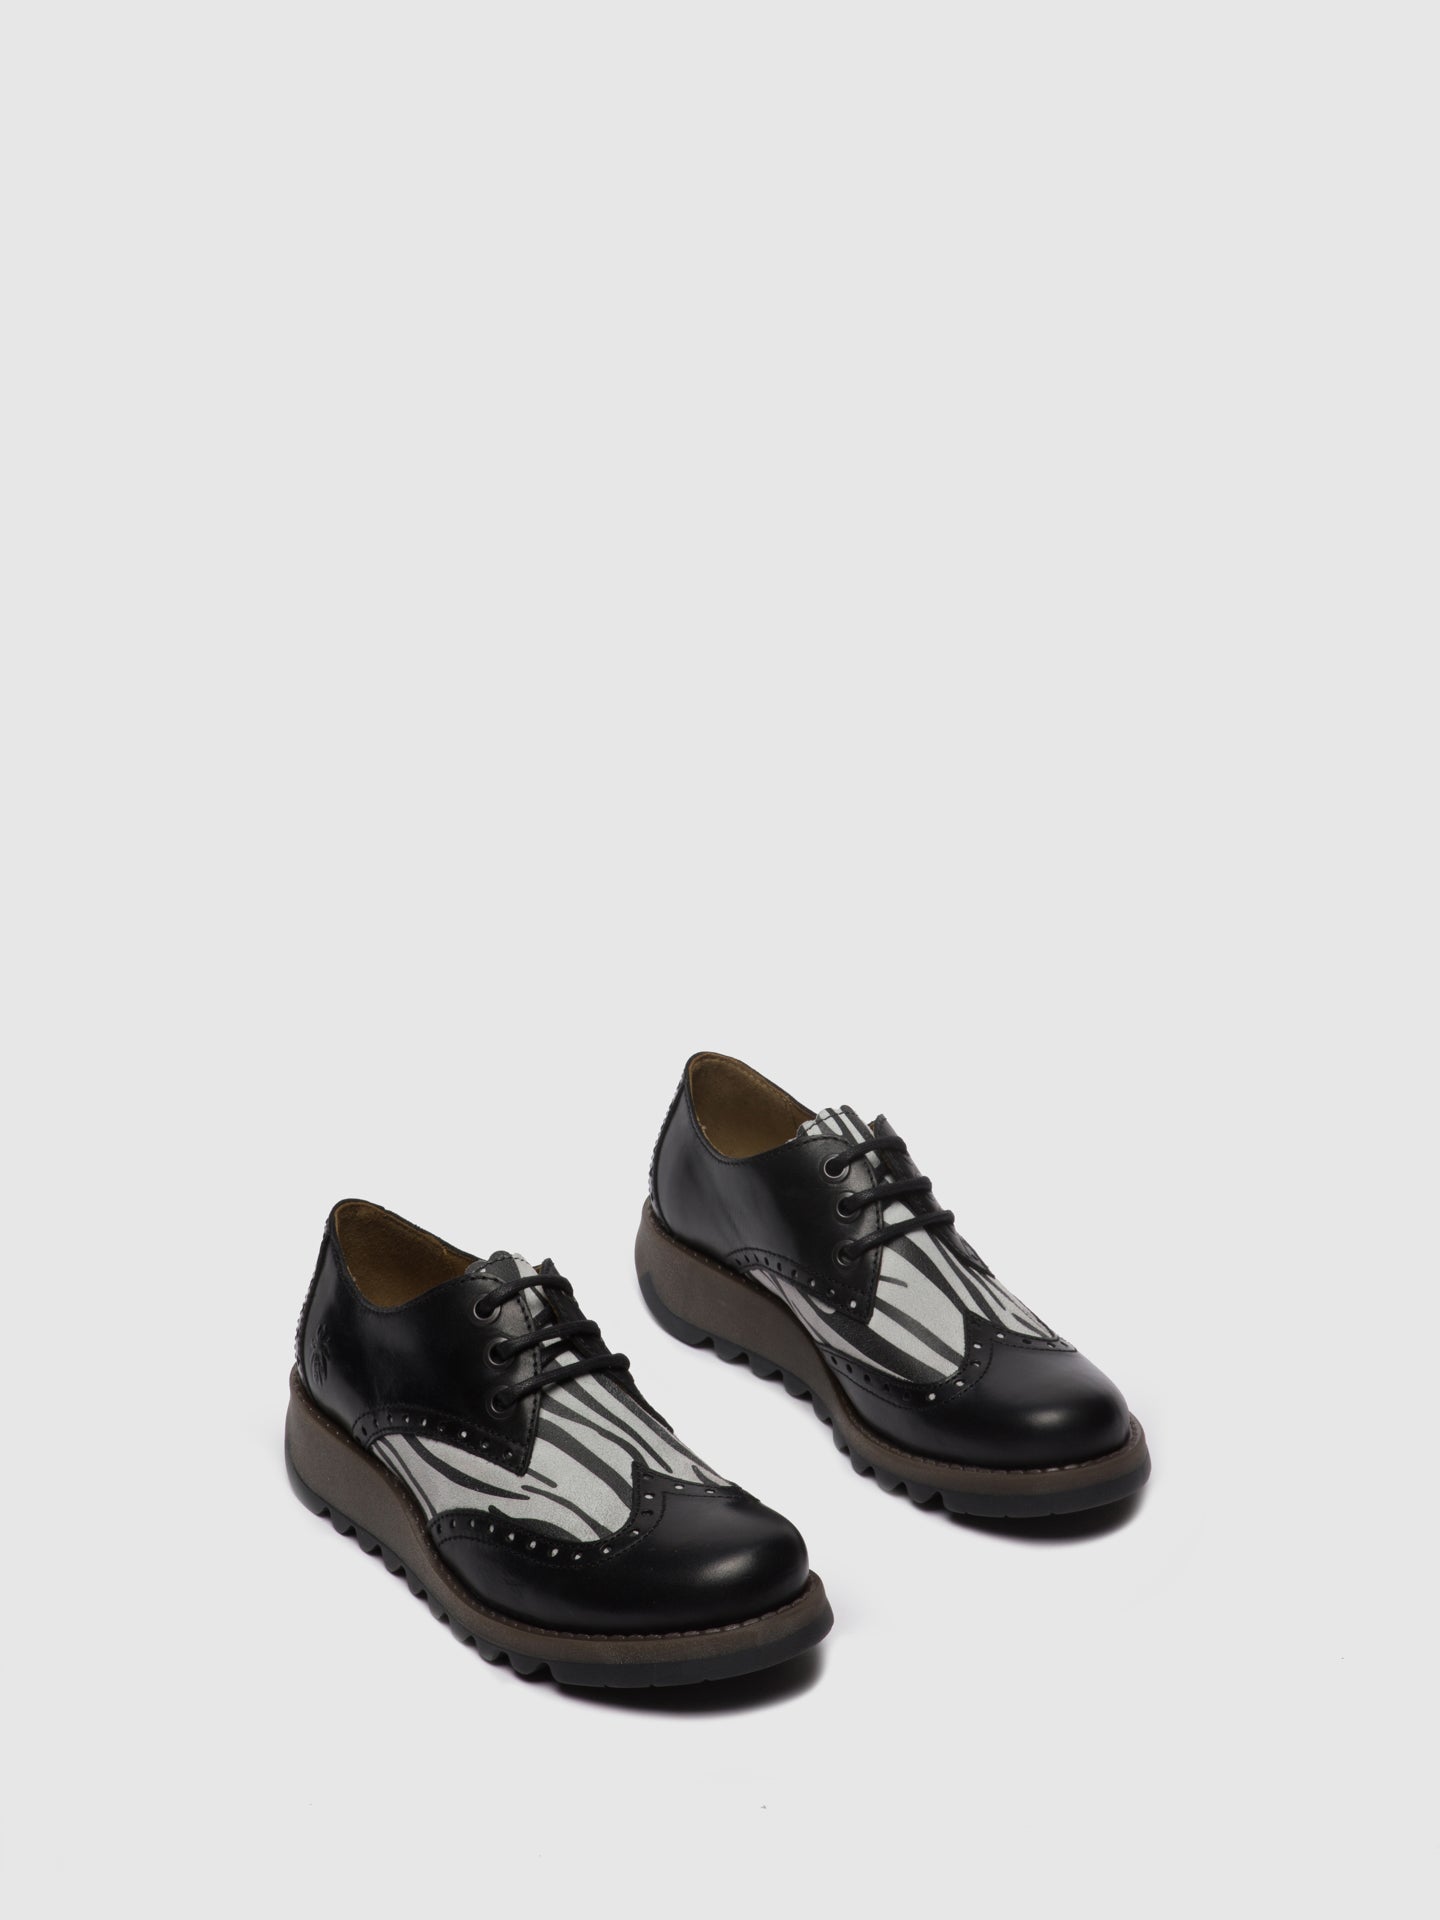 Fly London Sapatos Oxford SUME524FLY RUG/ZEBRA BLACK/OFFWHITE